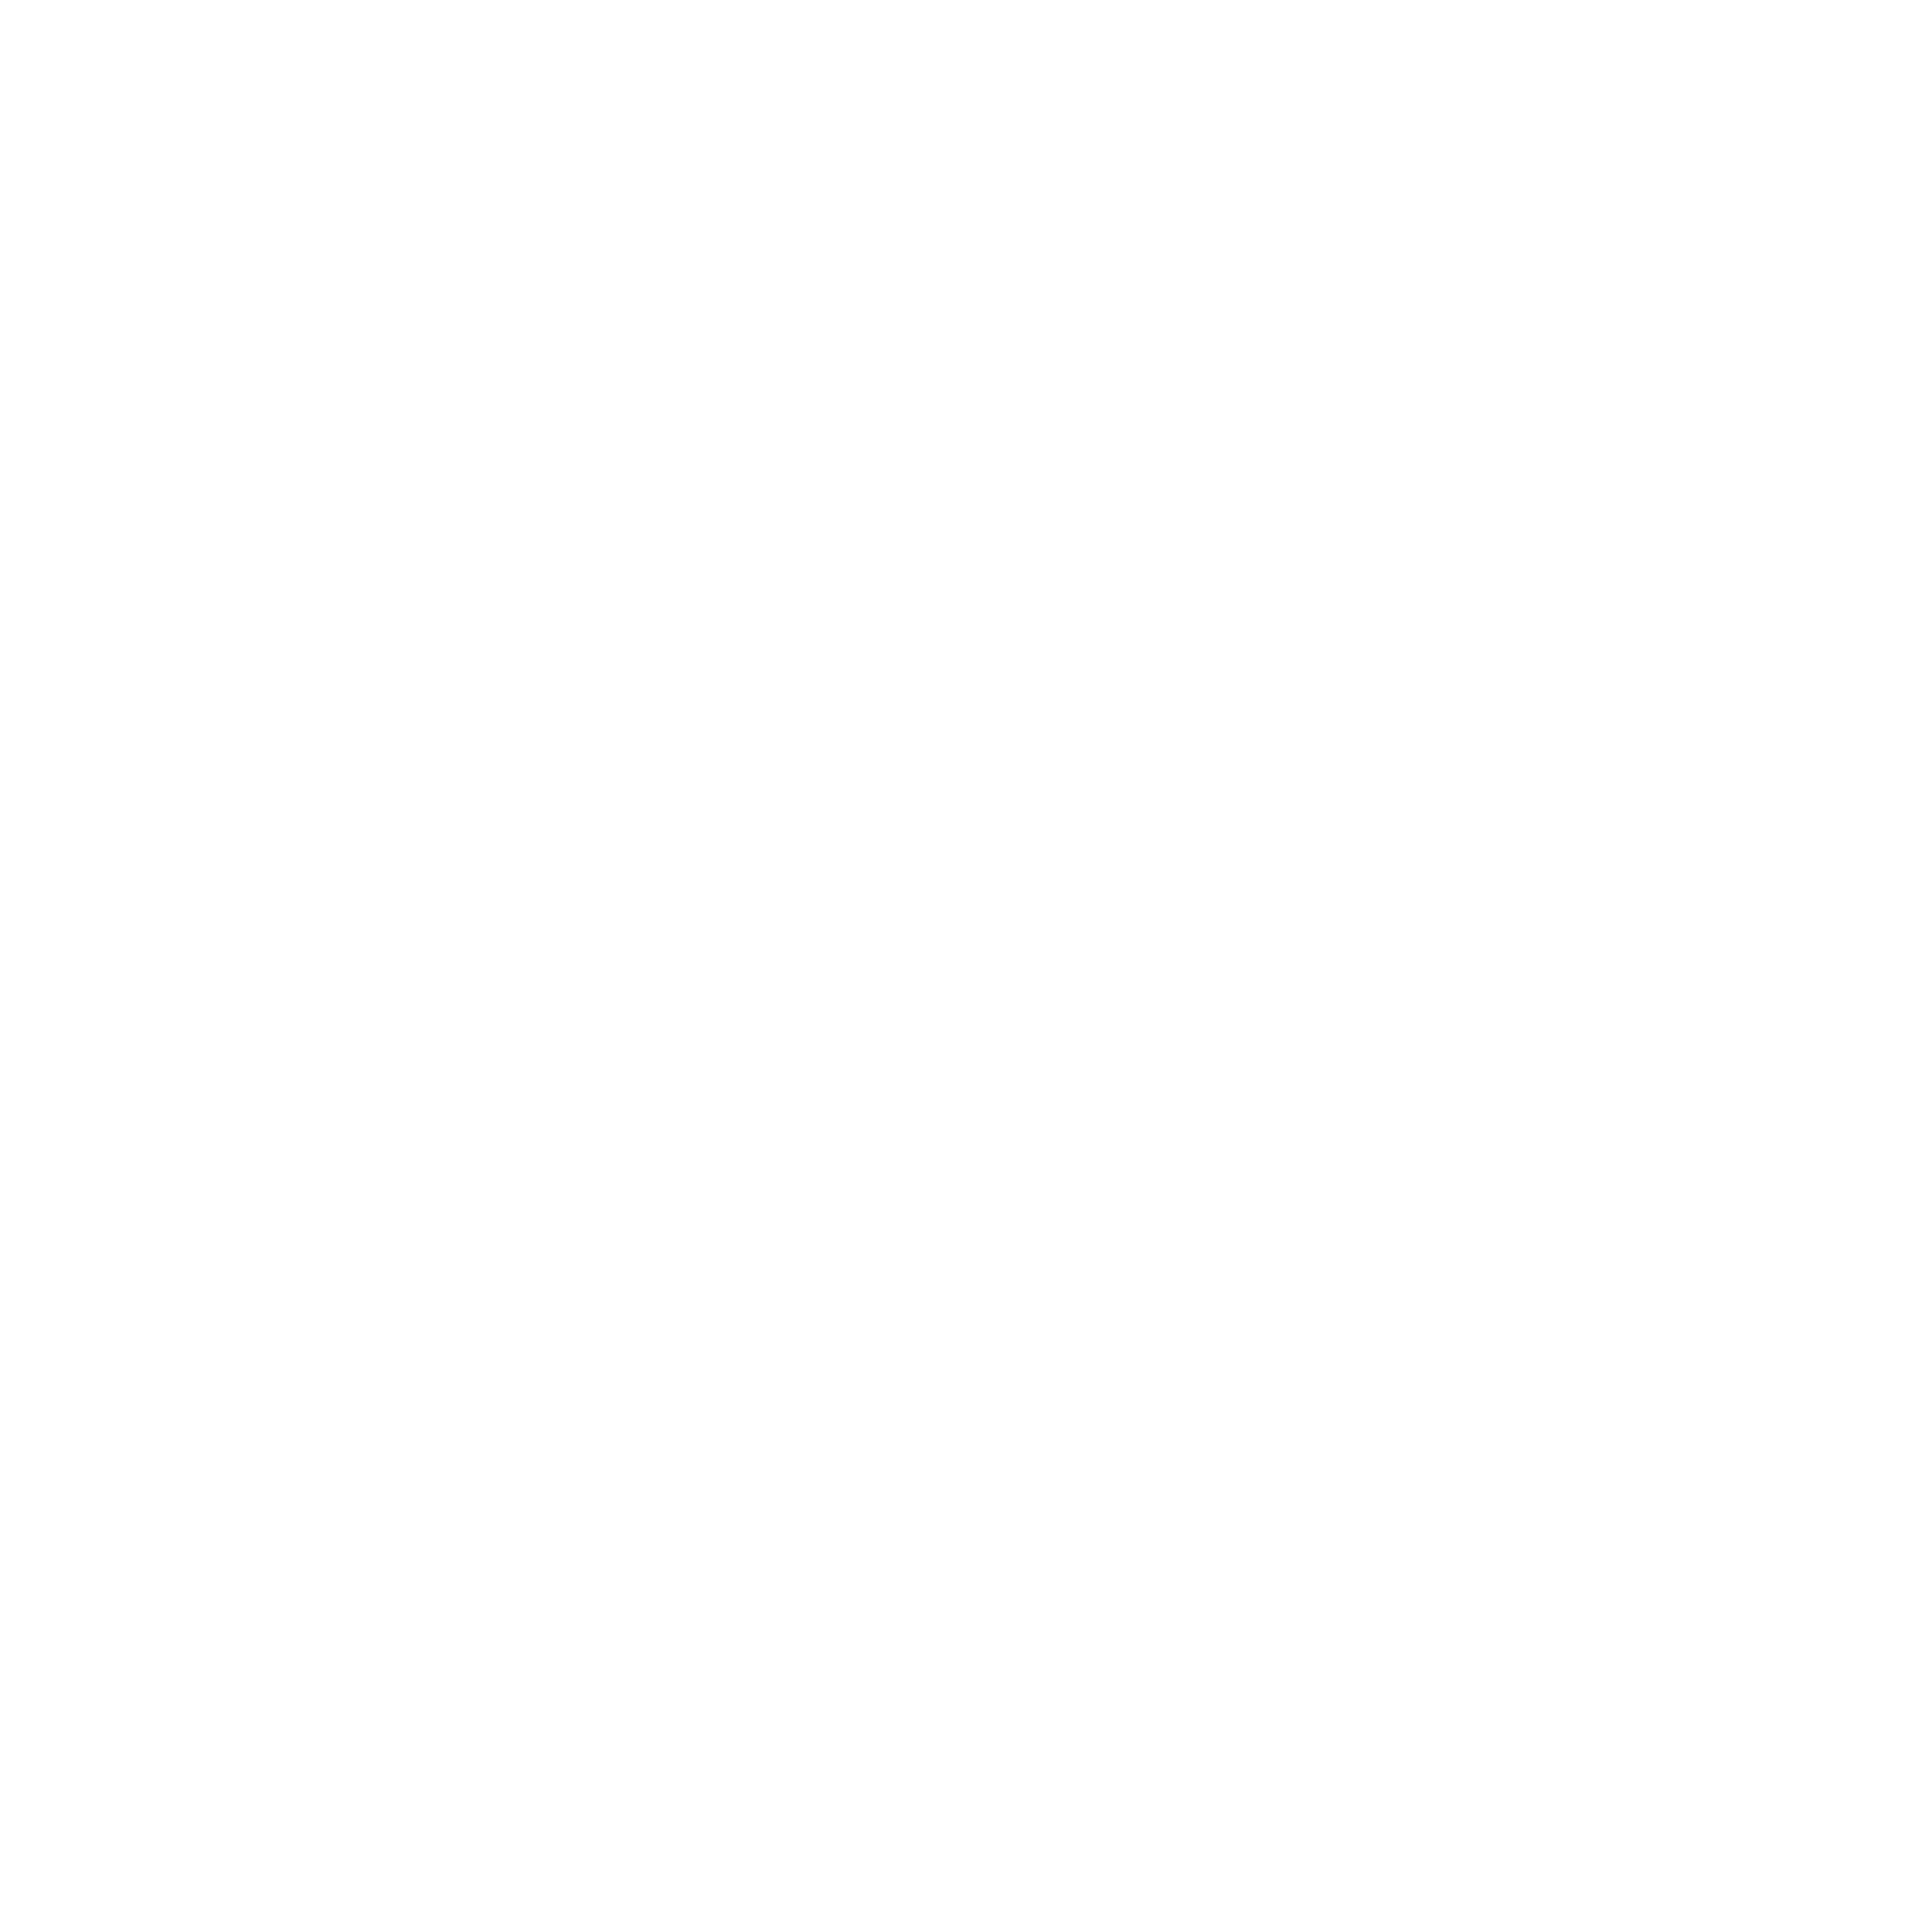 Hotel San Fernando Plaza